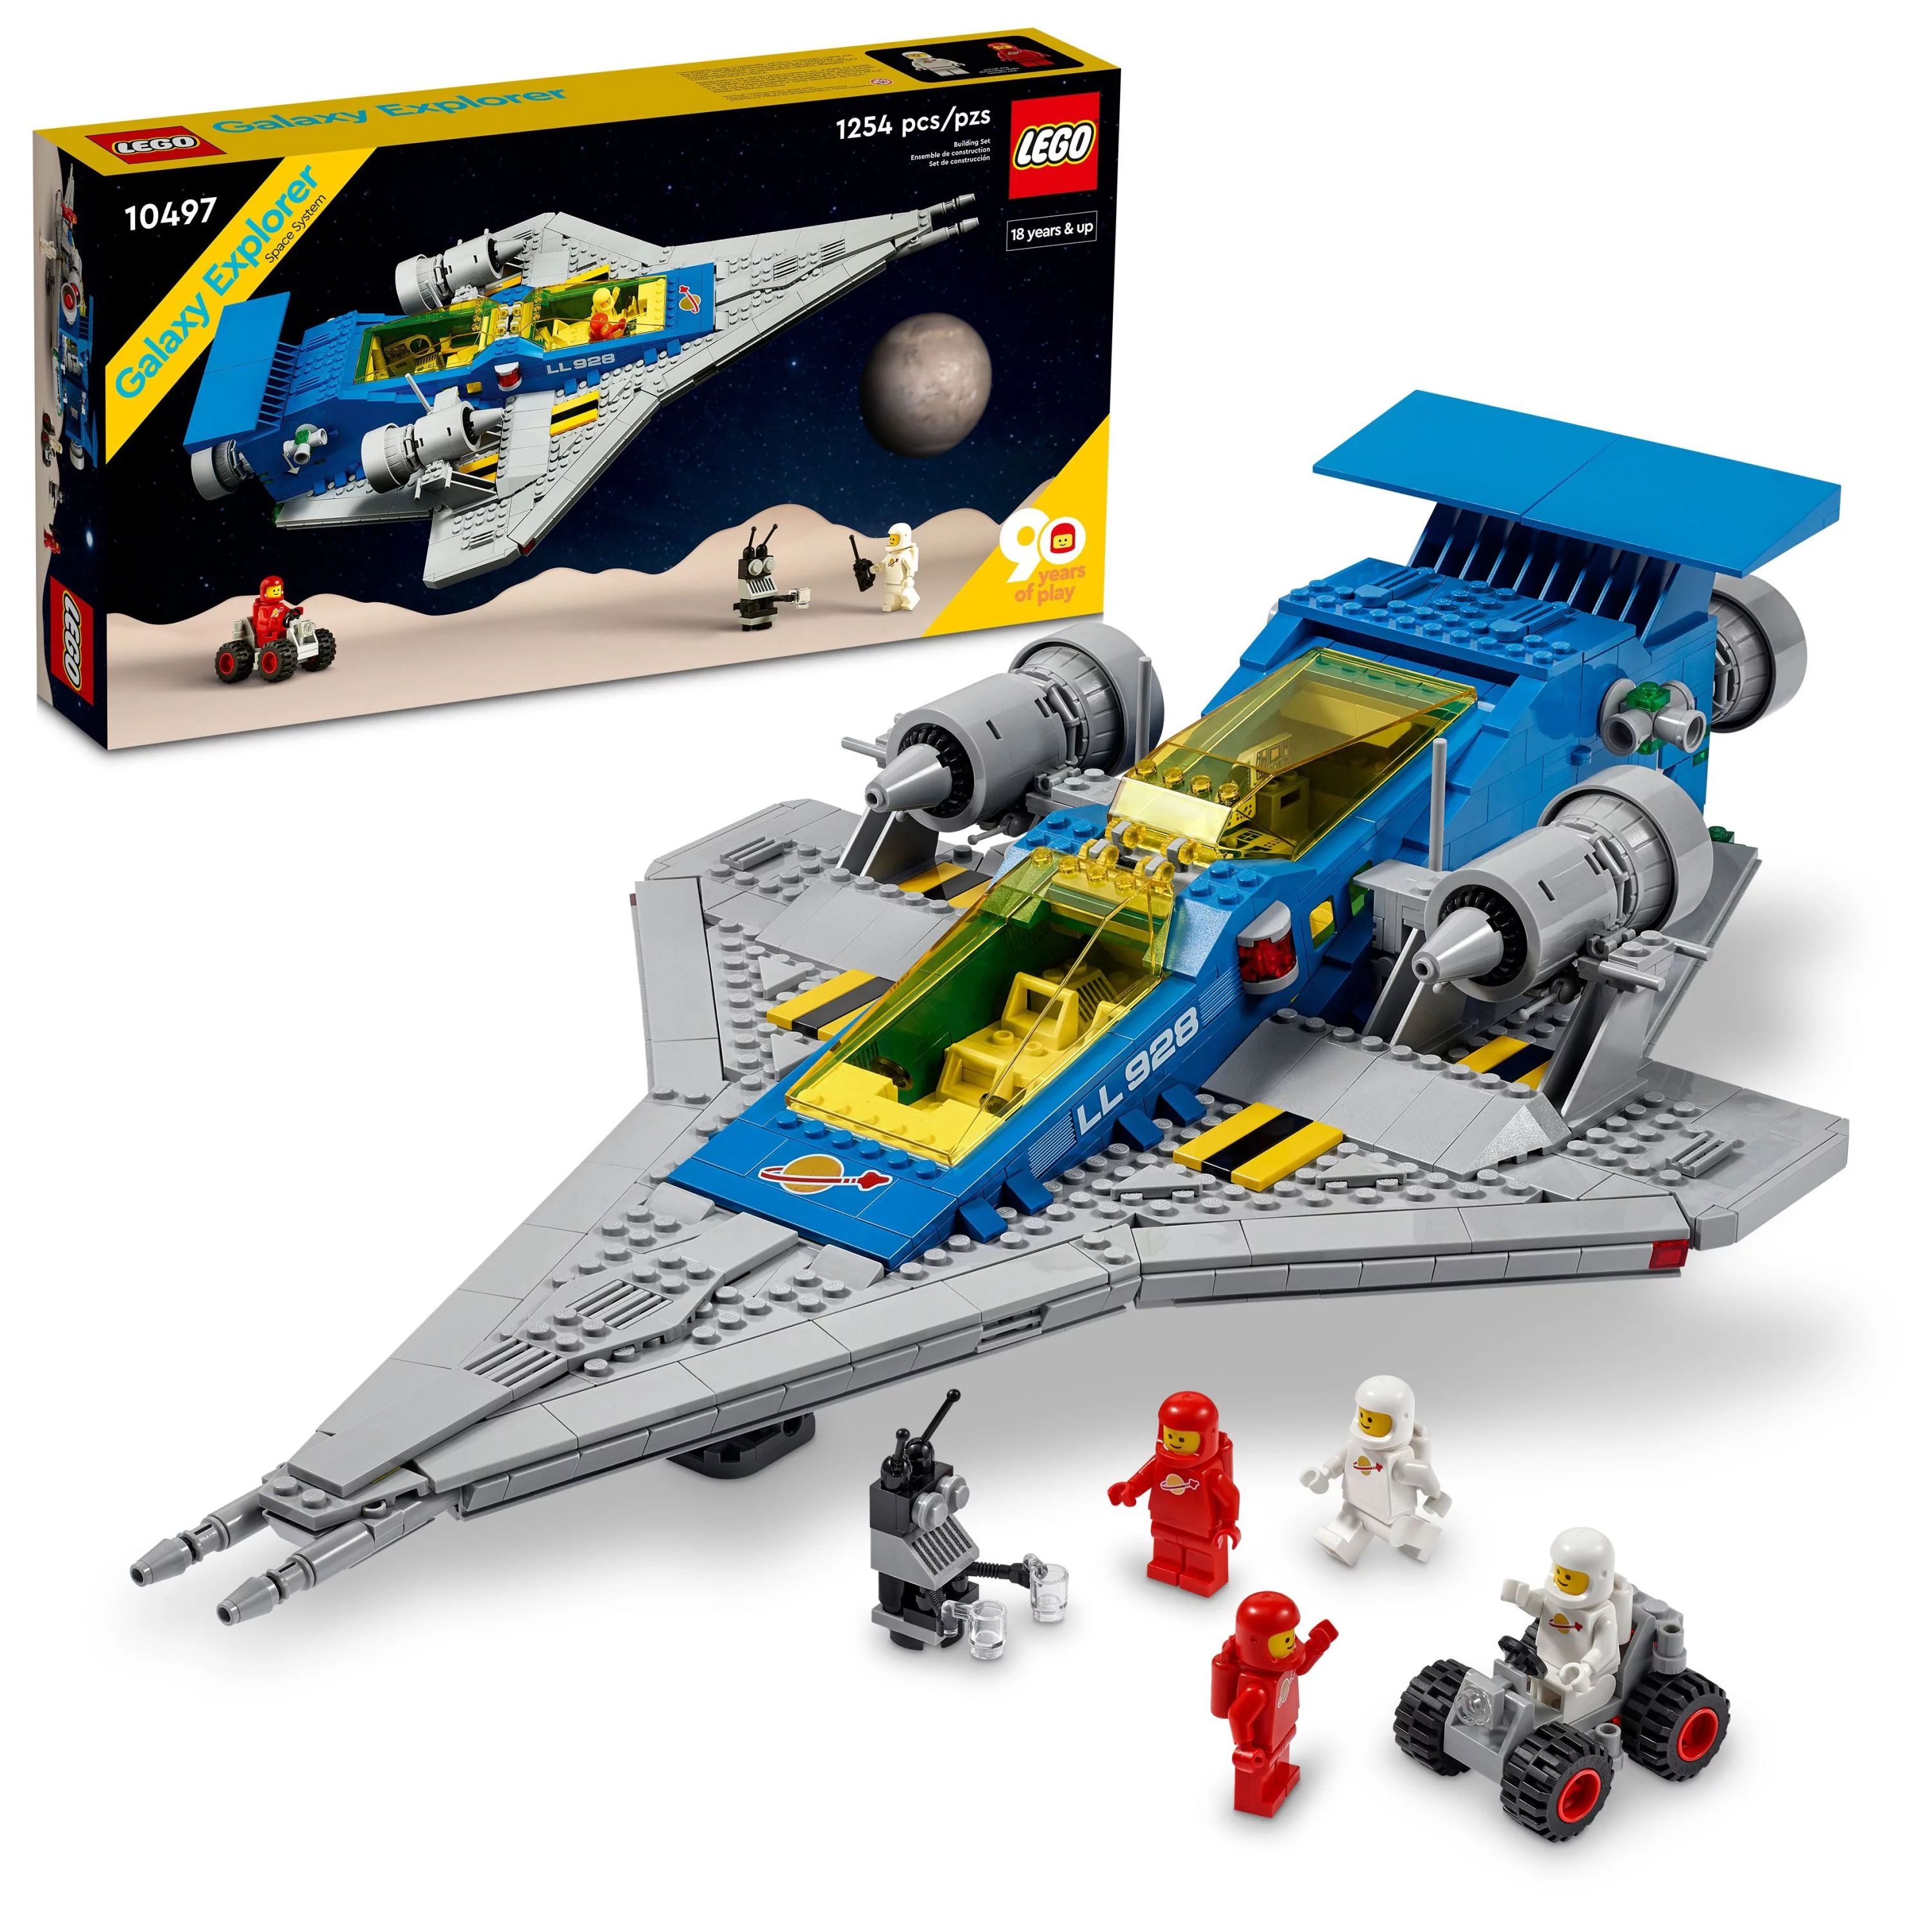 LEGO Galaxy Explorer Building Set for Adults who love Space 10497 - Walmart.com | Walmart (US)